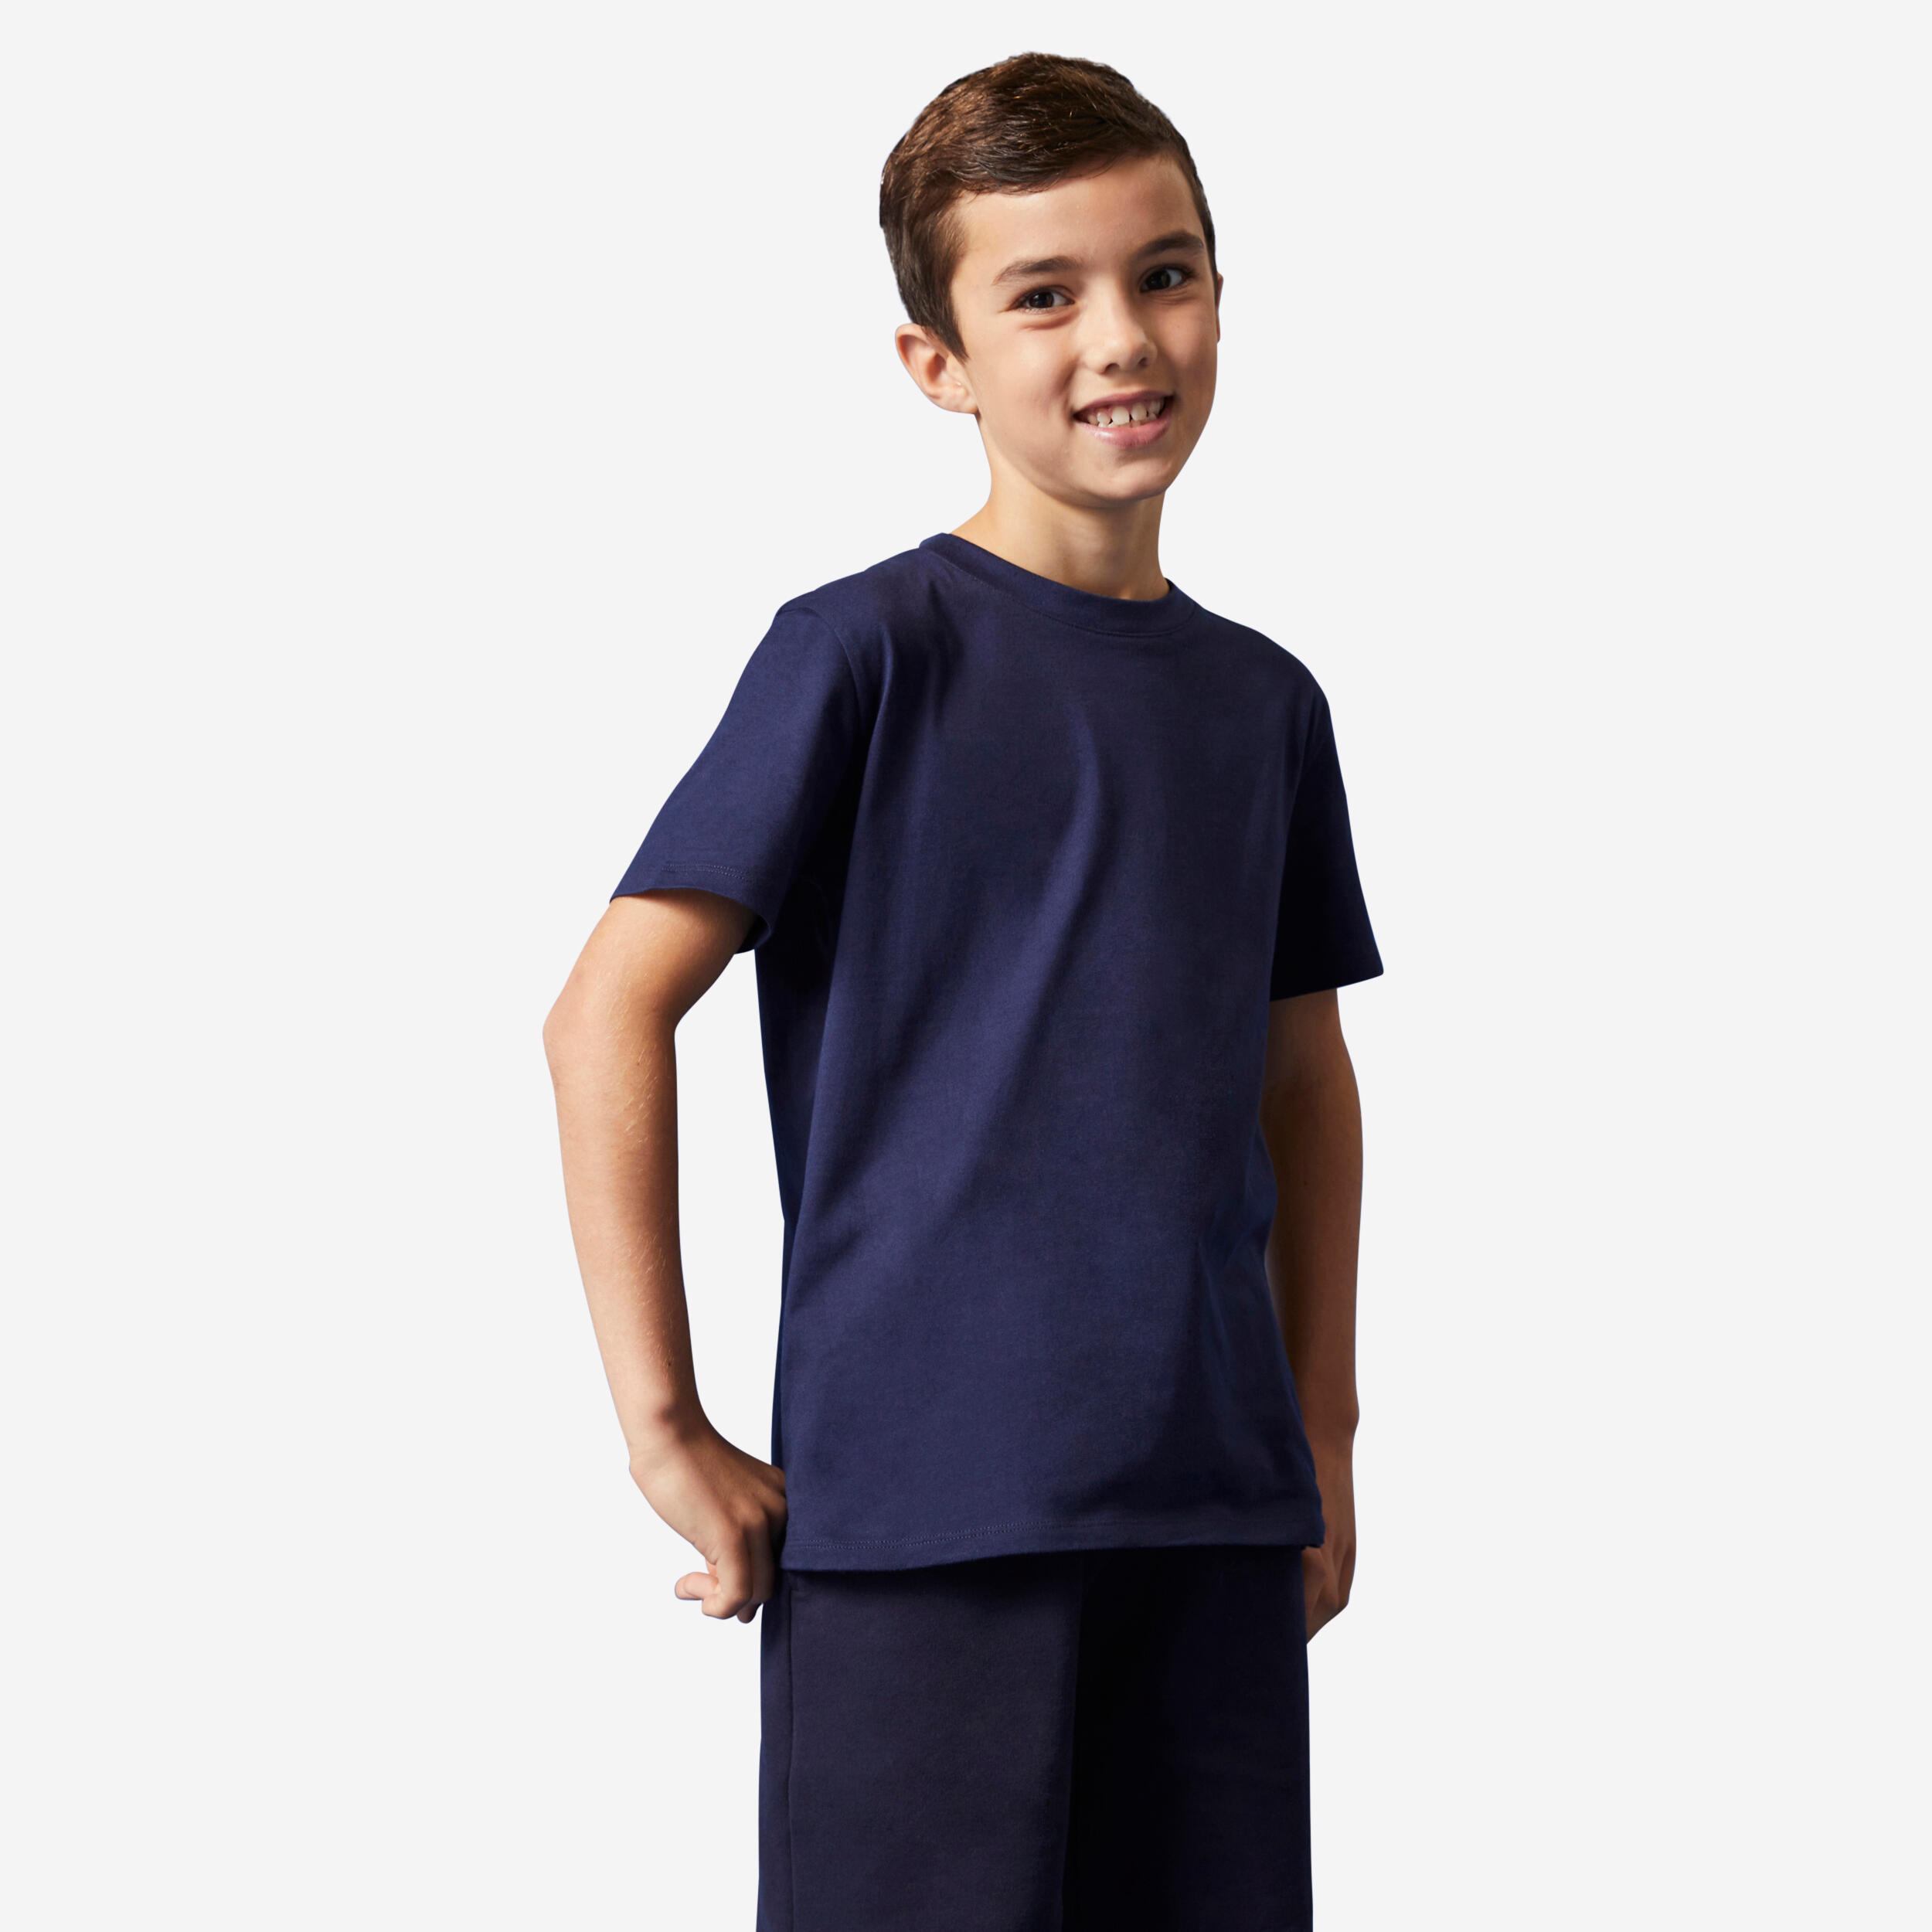 Kids' Unisex Cotton T-Shirt - Navy 1/7